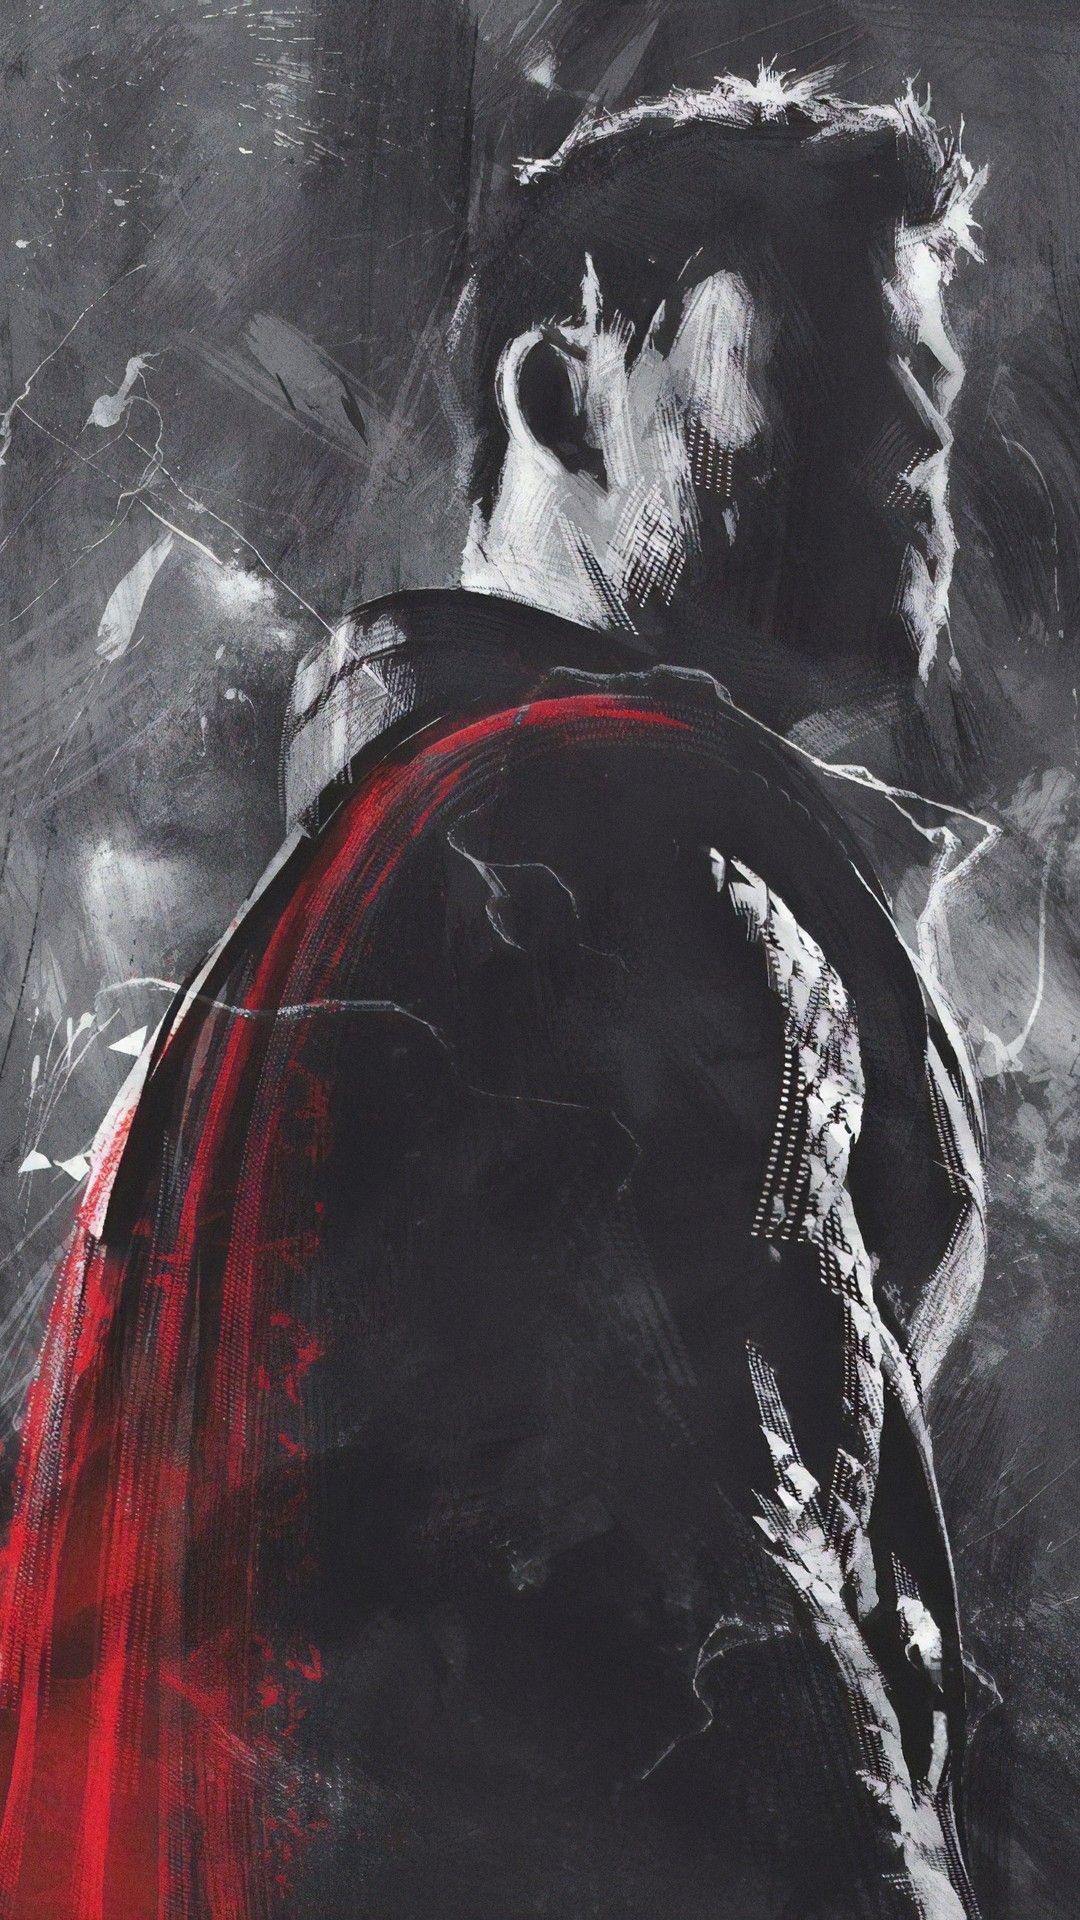 Avengers Endgame 2019 iPhone X Wallpaper Movie Poster